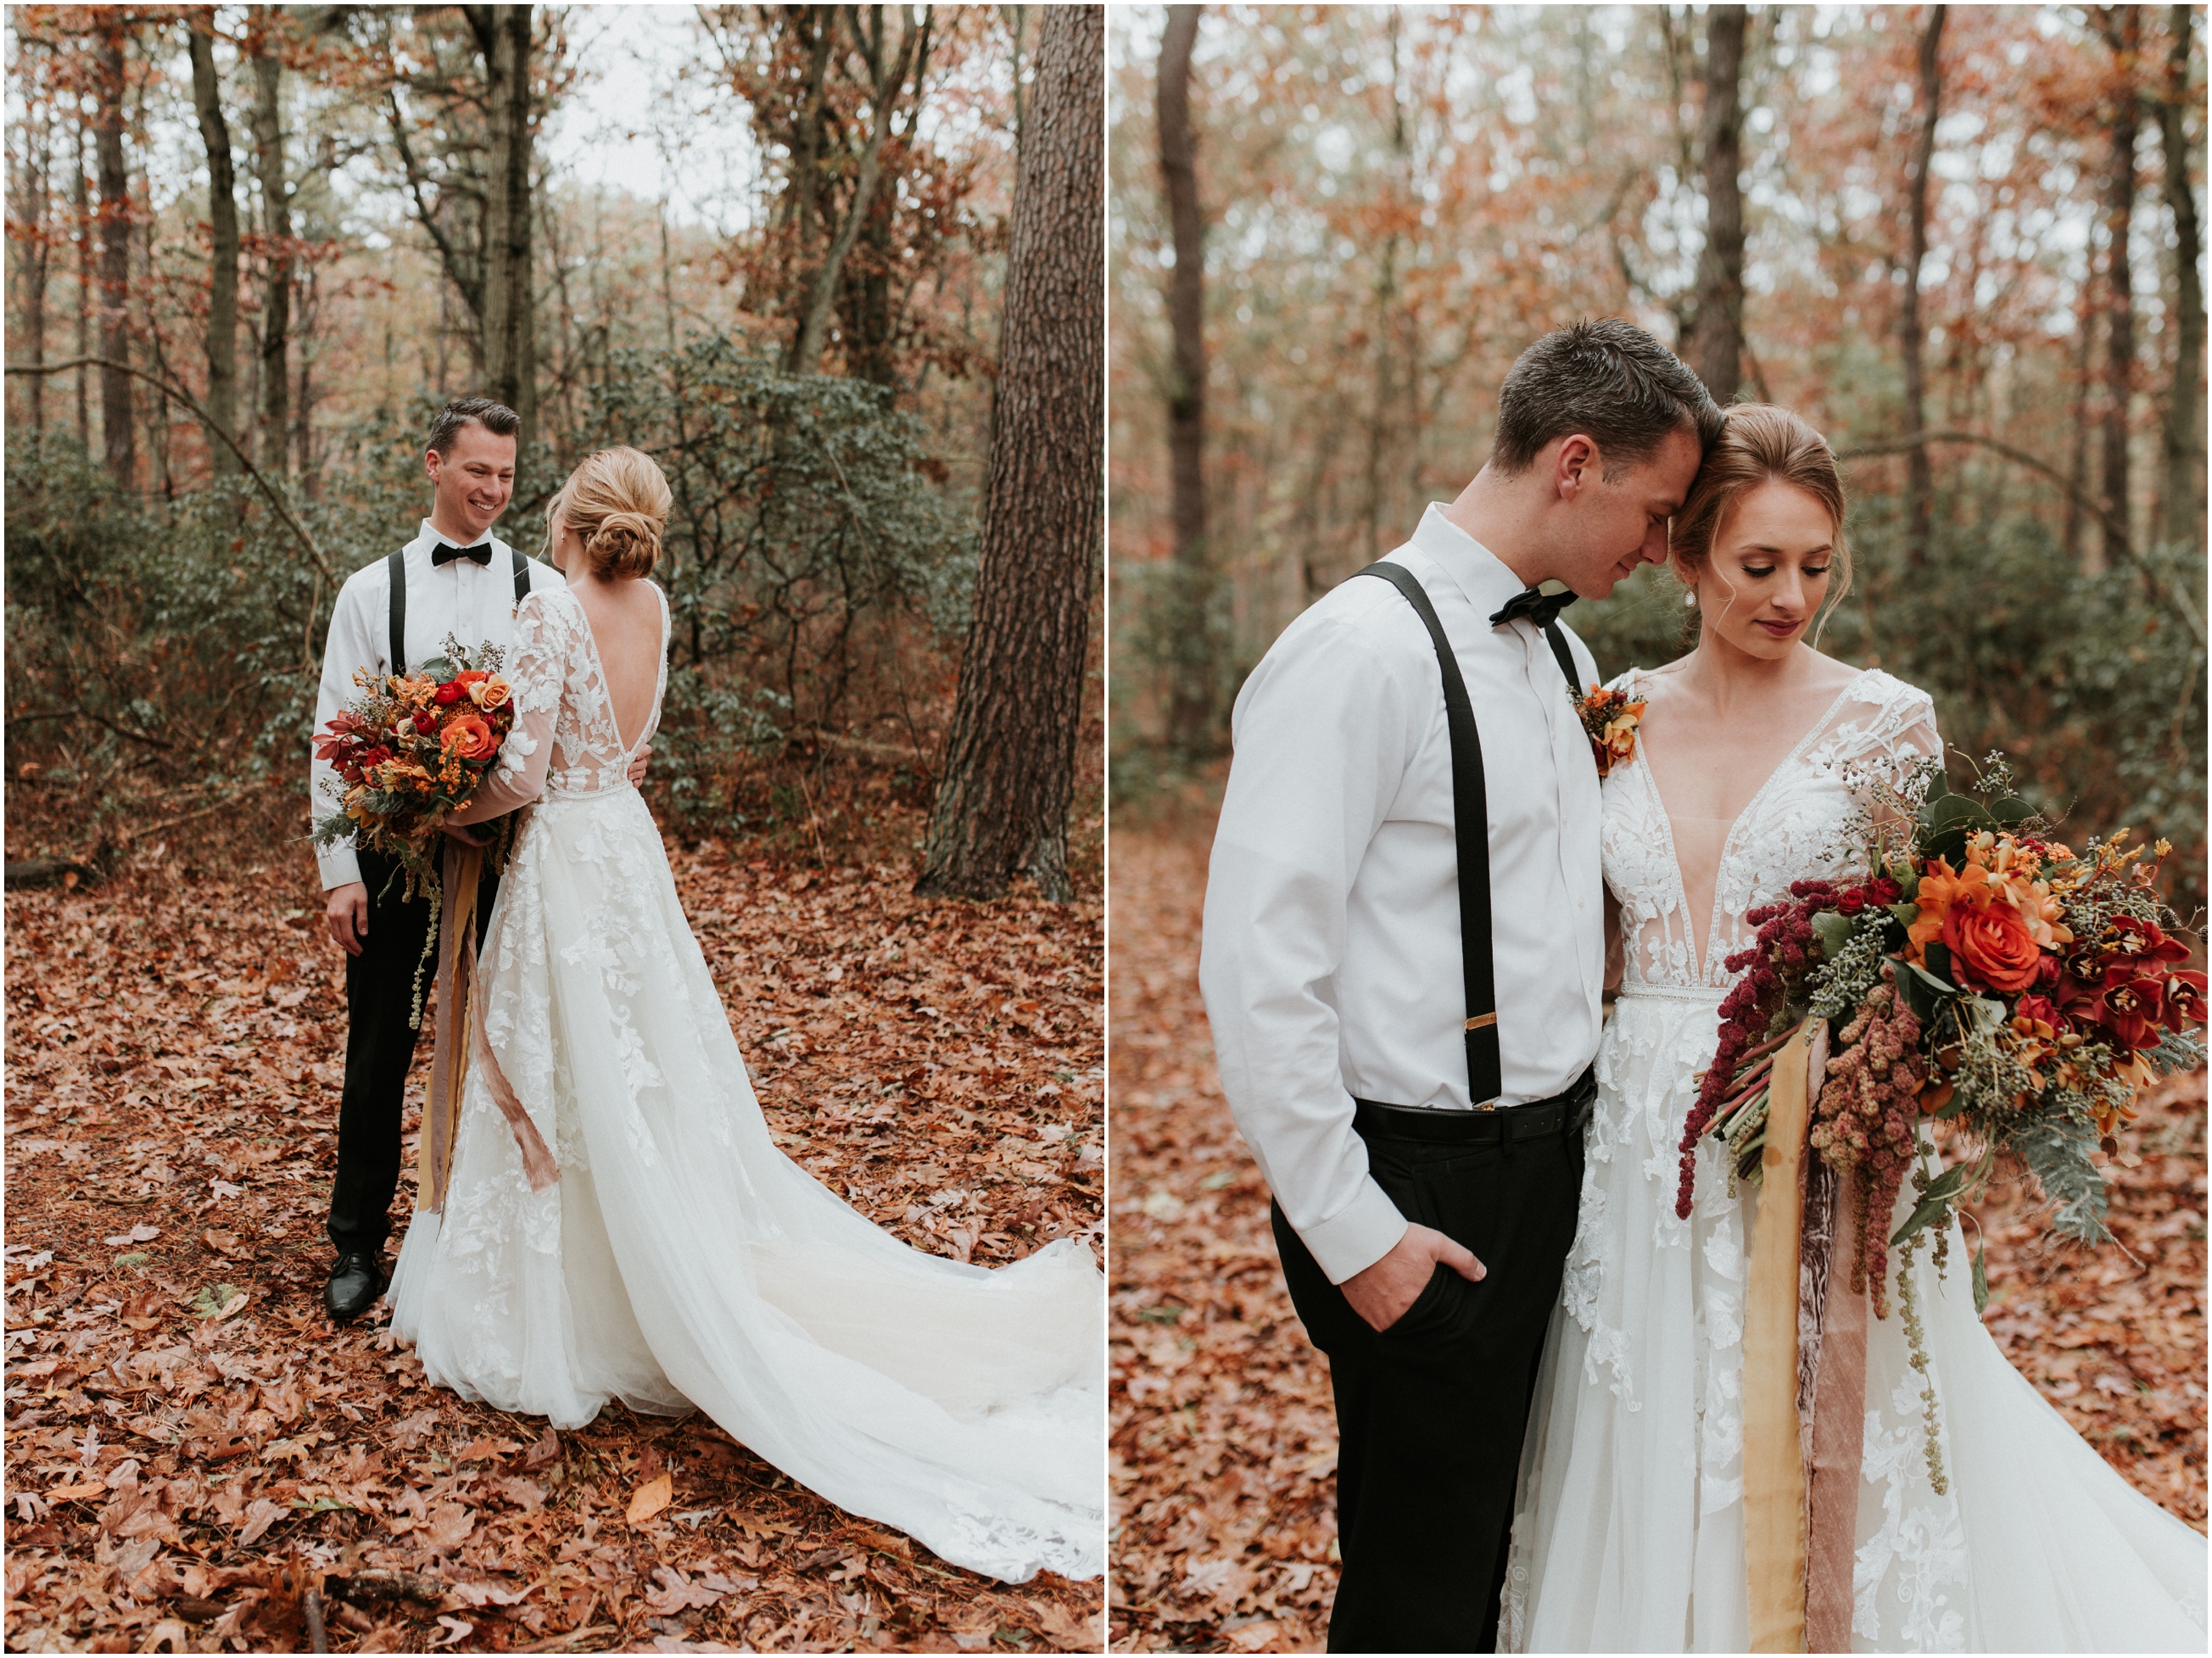 http://torikelner.com/wp-content/uploads/2018/03/Fall-Styled-Bridal-Wedding-Inspiration-New-Jersey-Photographer_0006.jpg